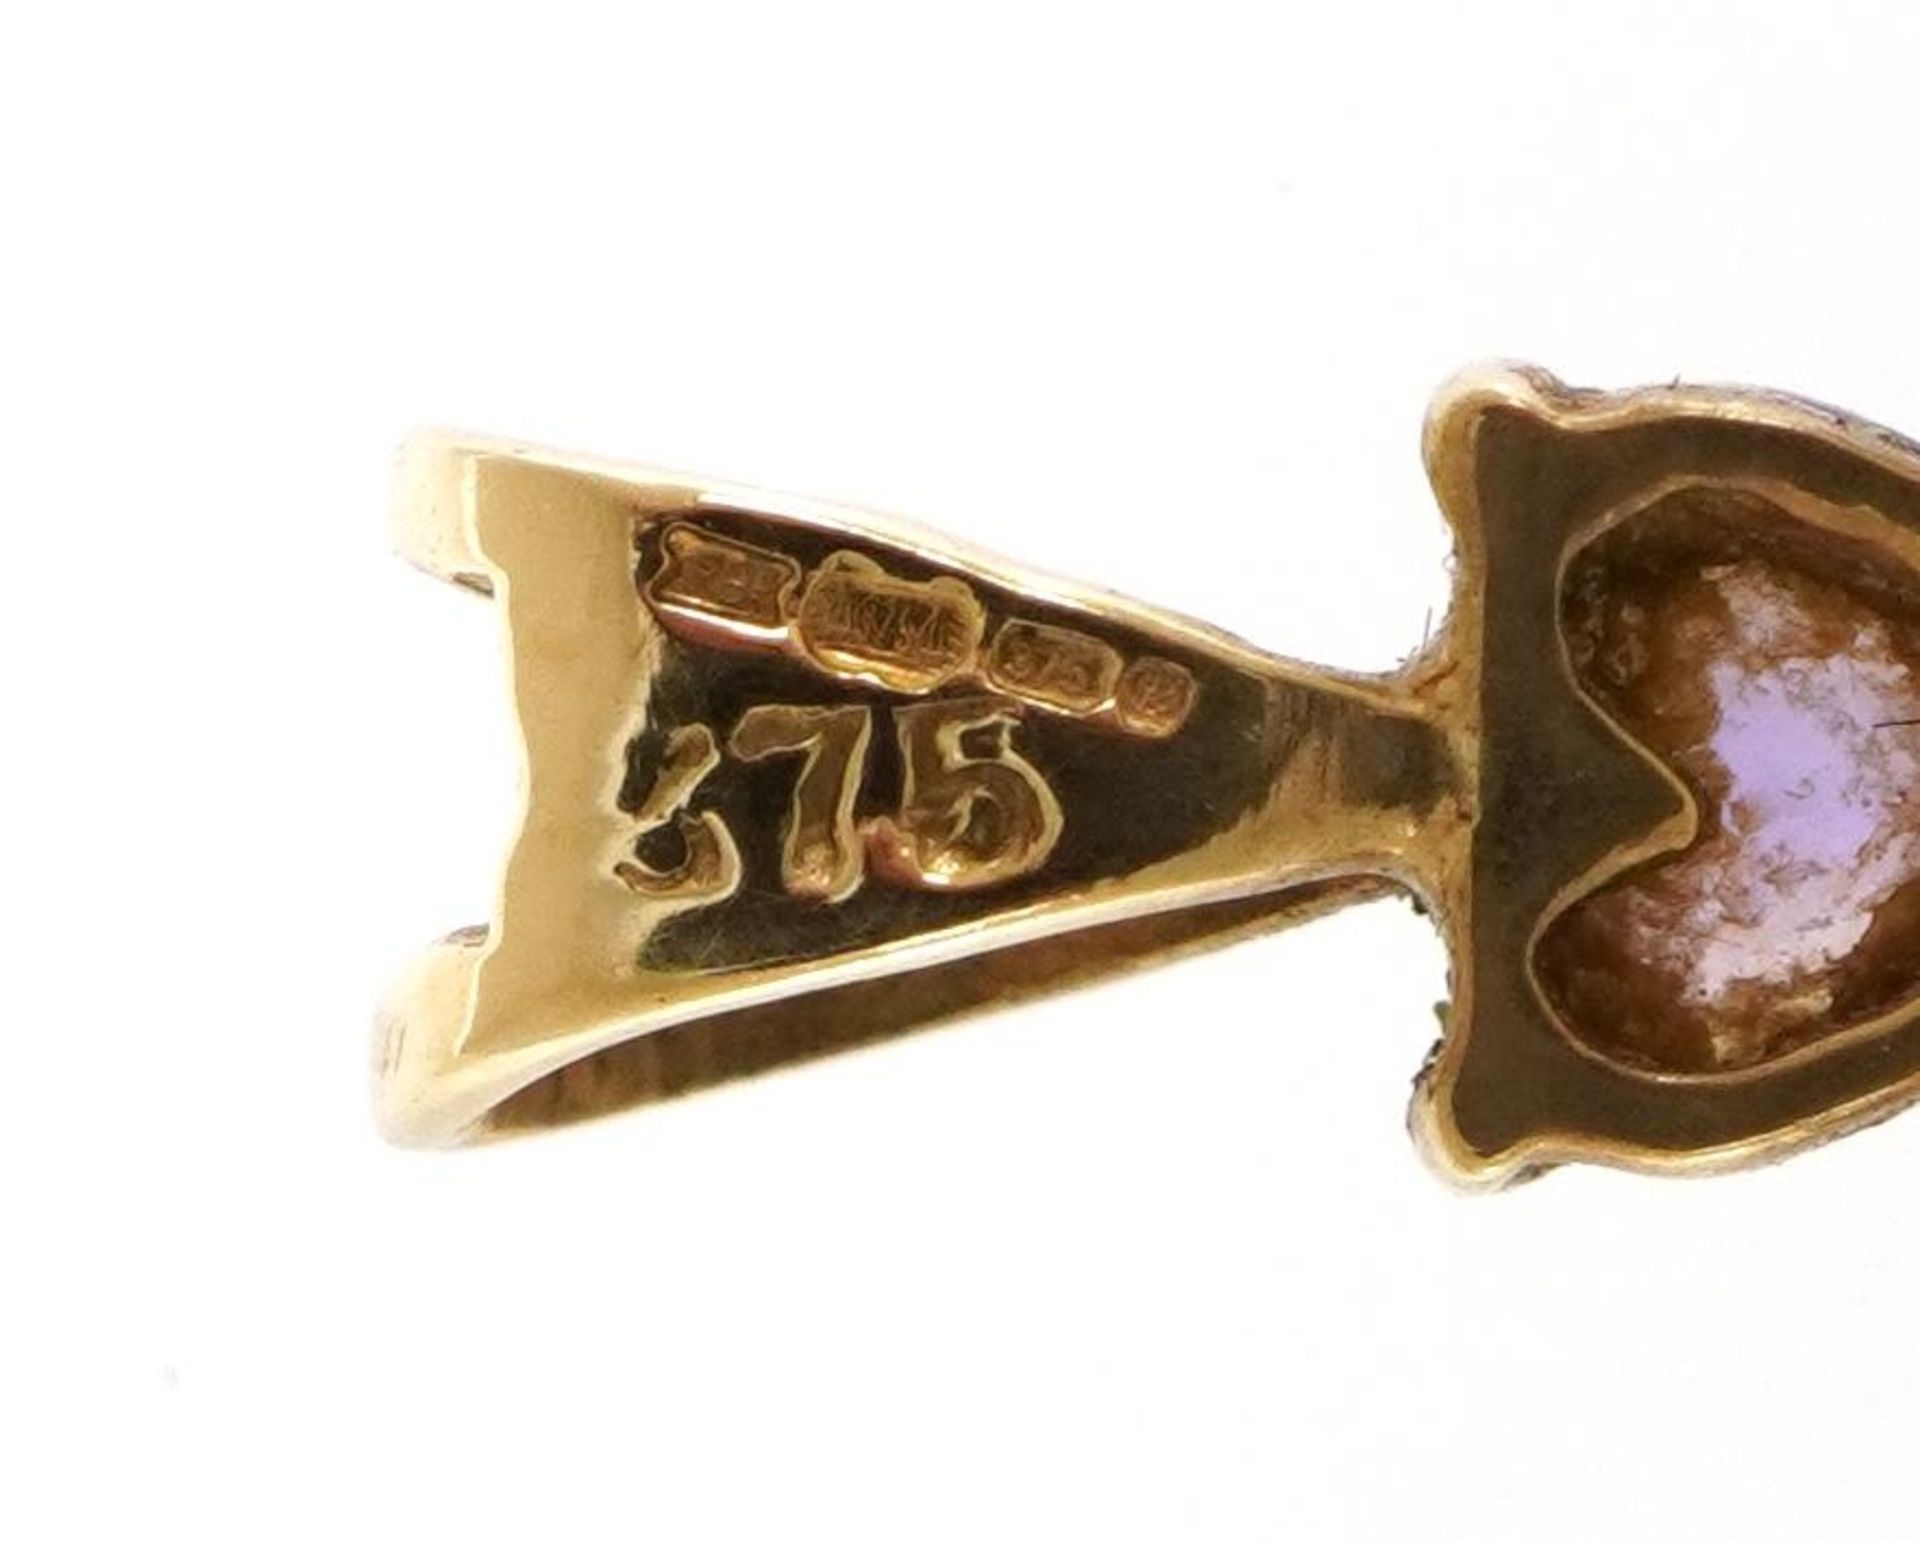 9ct gold amethyst cross pendant set with a diamond, 2.0cm high, 1.1g - Image 3 of 3